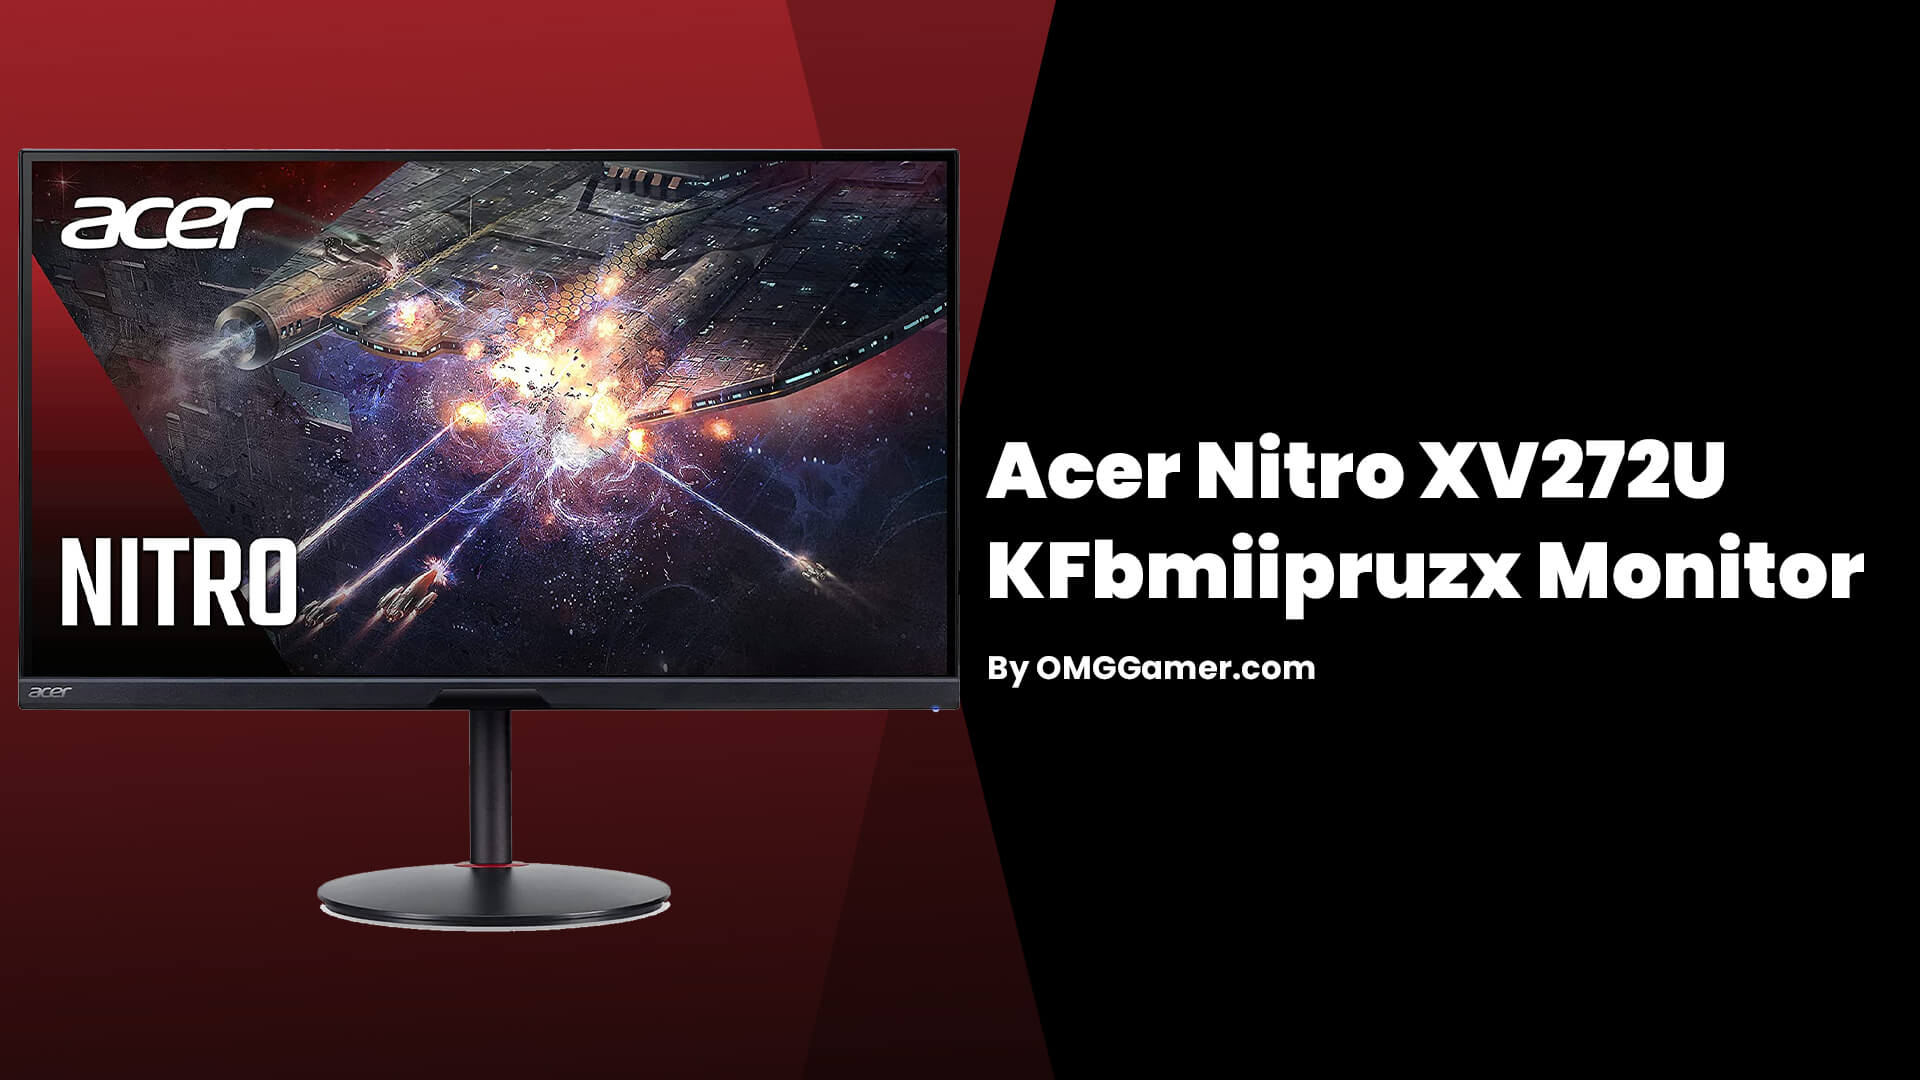 Acer Nitro XV272U KFbmiipruzx Monitor